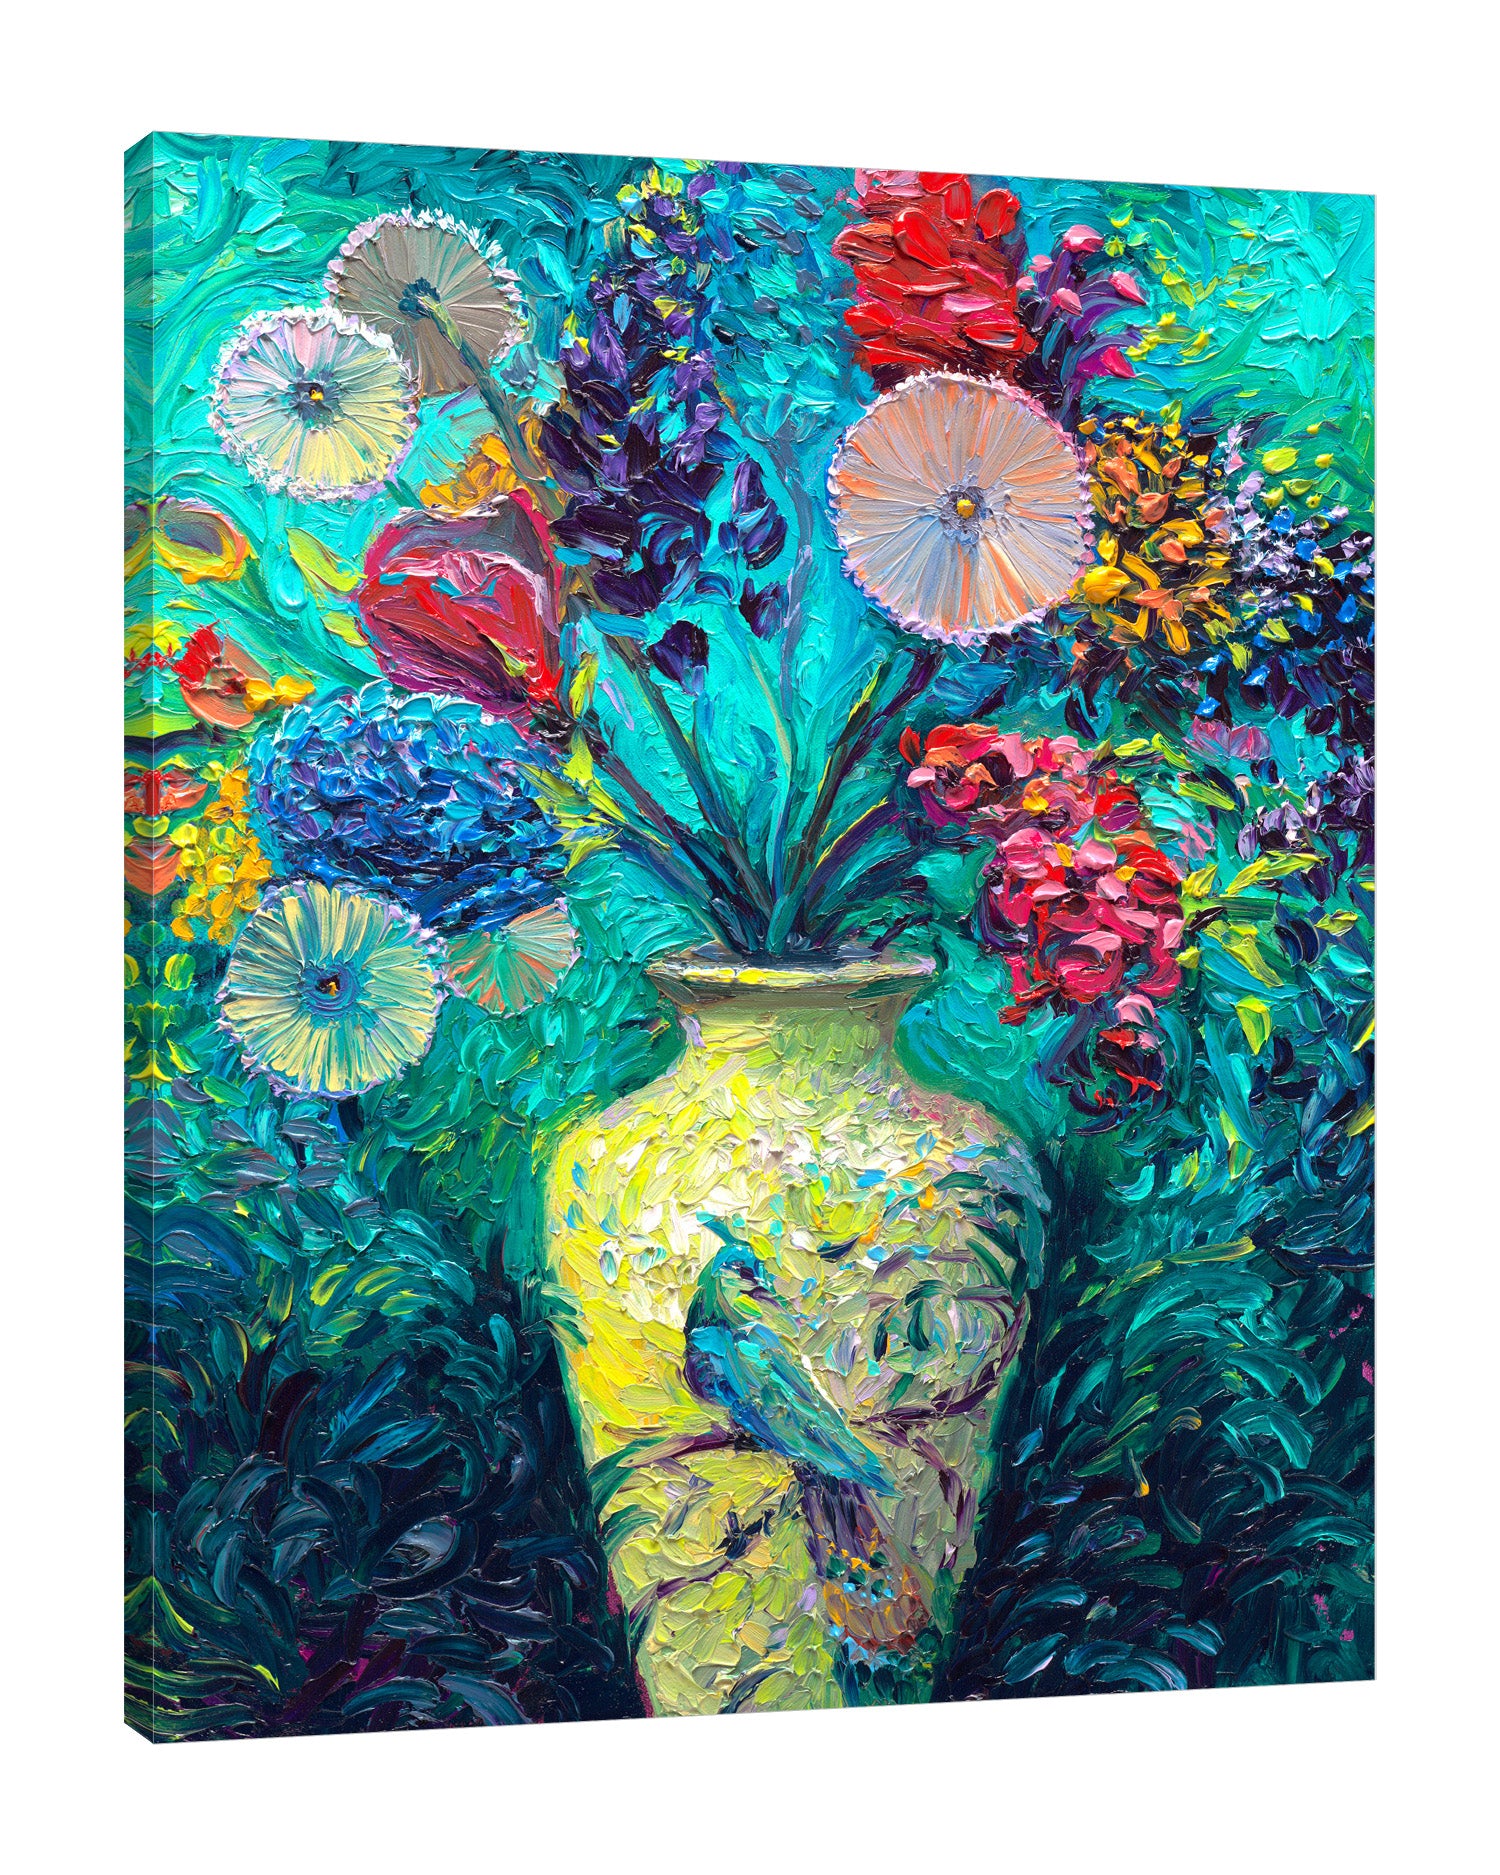 Iris-Scott,Modern & Contemporary,Floral & Botanical,Animals,florals,floral,flowers,flower,bouquet,bouquets,vases,vase,vessel,vessels,peacock,peacocks,animals,animal,strokes,bloom,